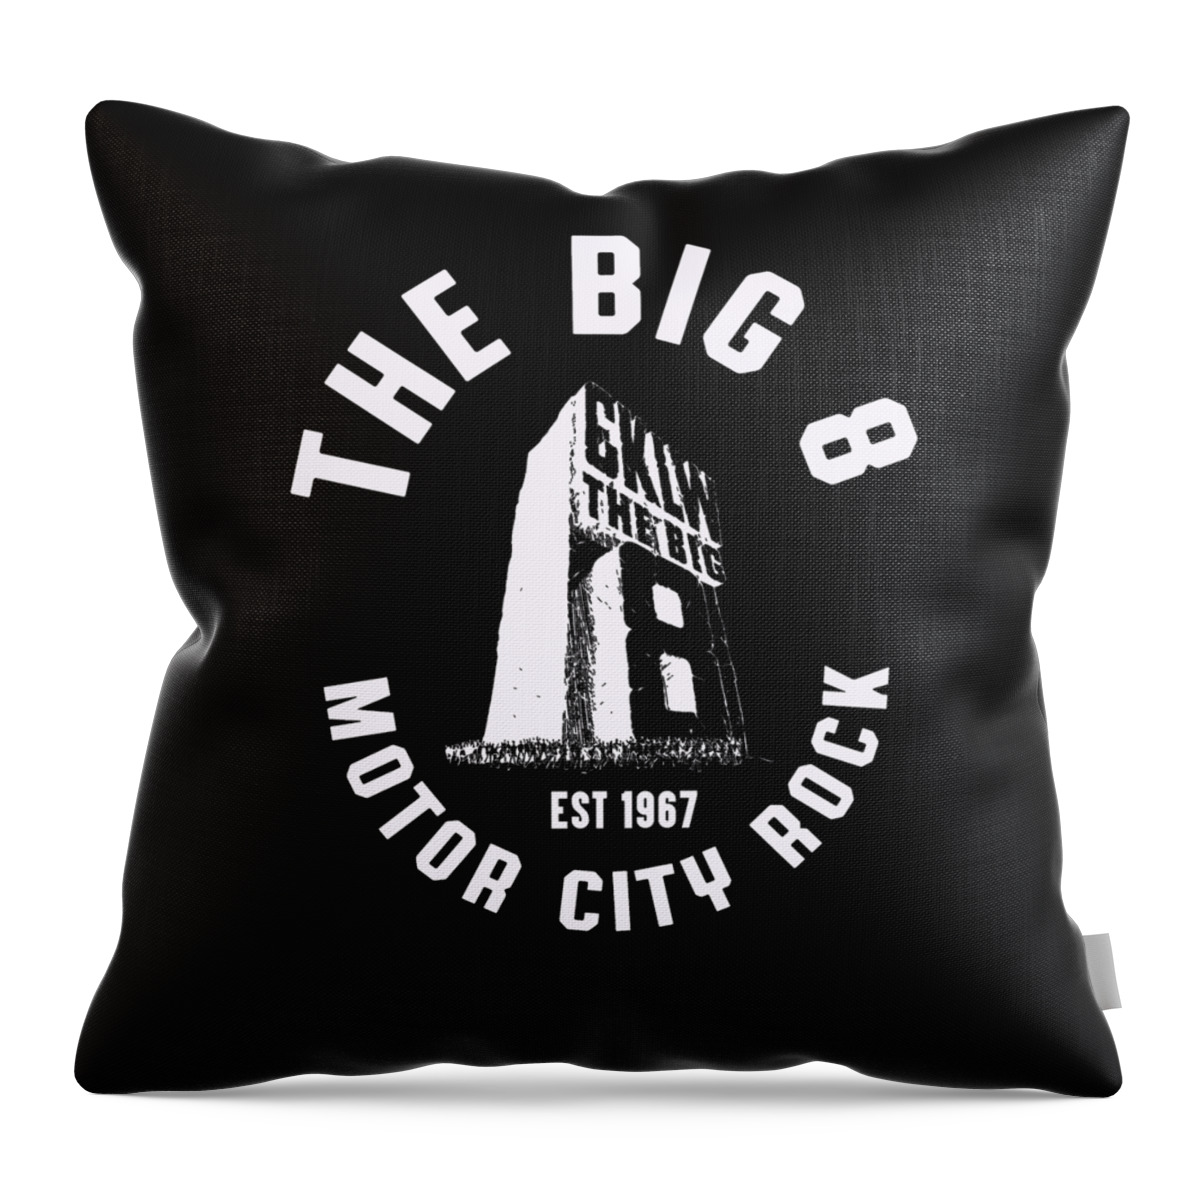 Cklw Thebig8 Radio Throw Pillow featuring the digital art CKLW The Big 8 Motor City Rock white by Thomas Leparskas